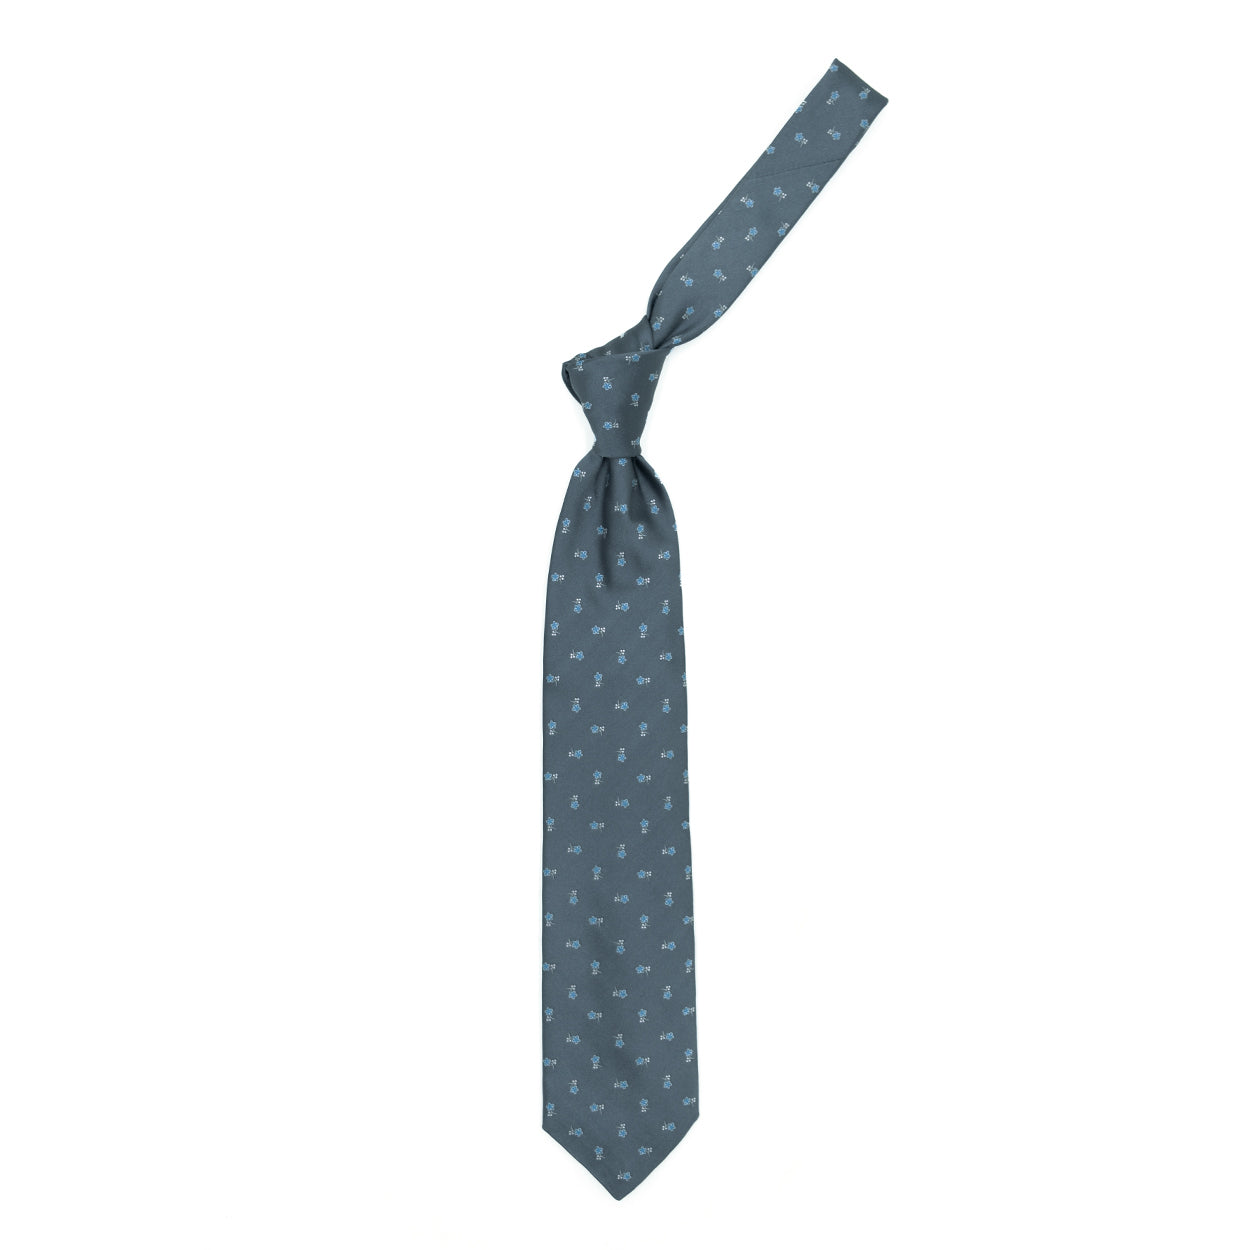 Grey tie with blue flowers